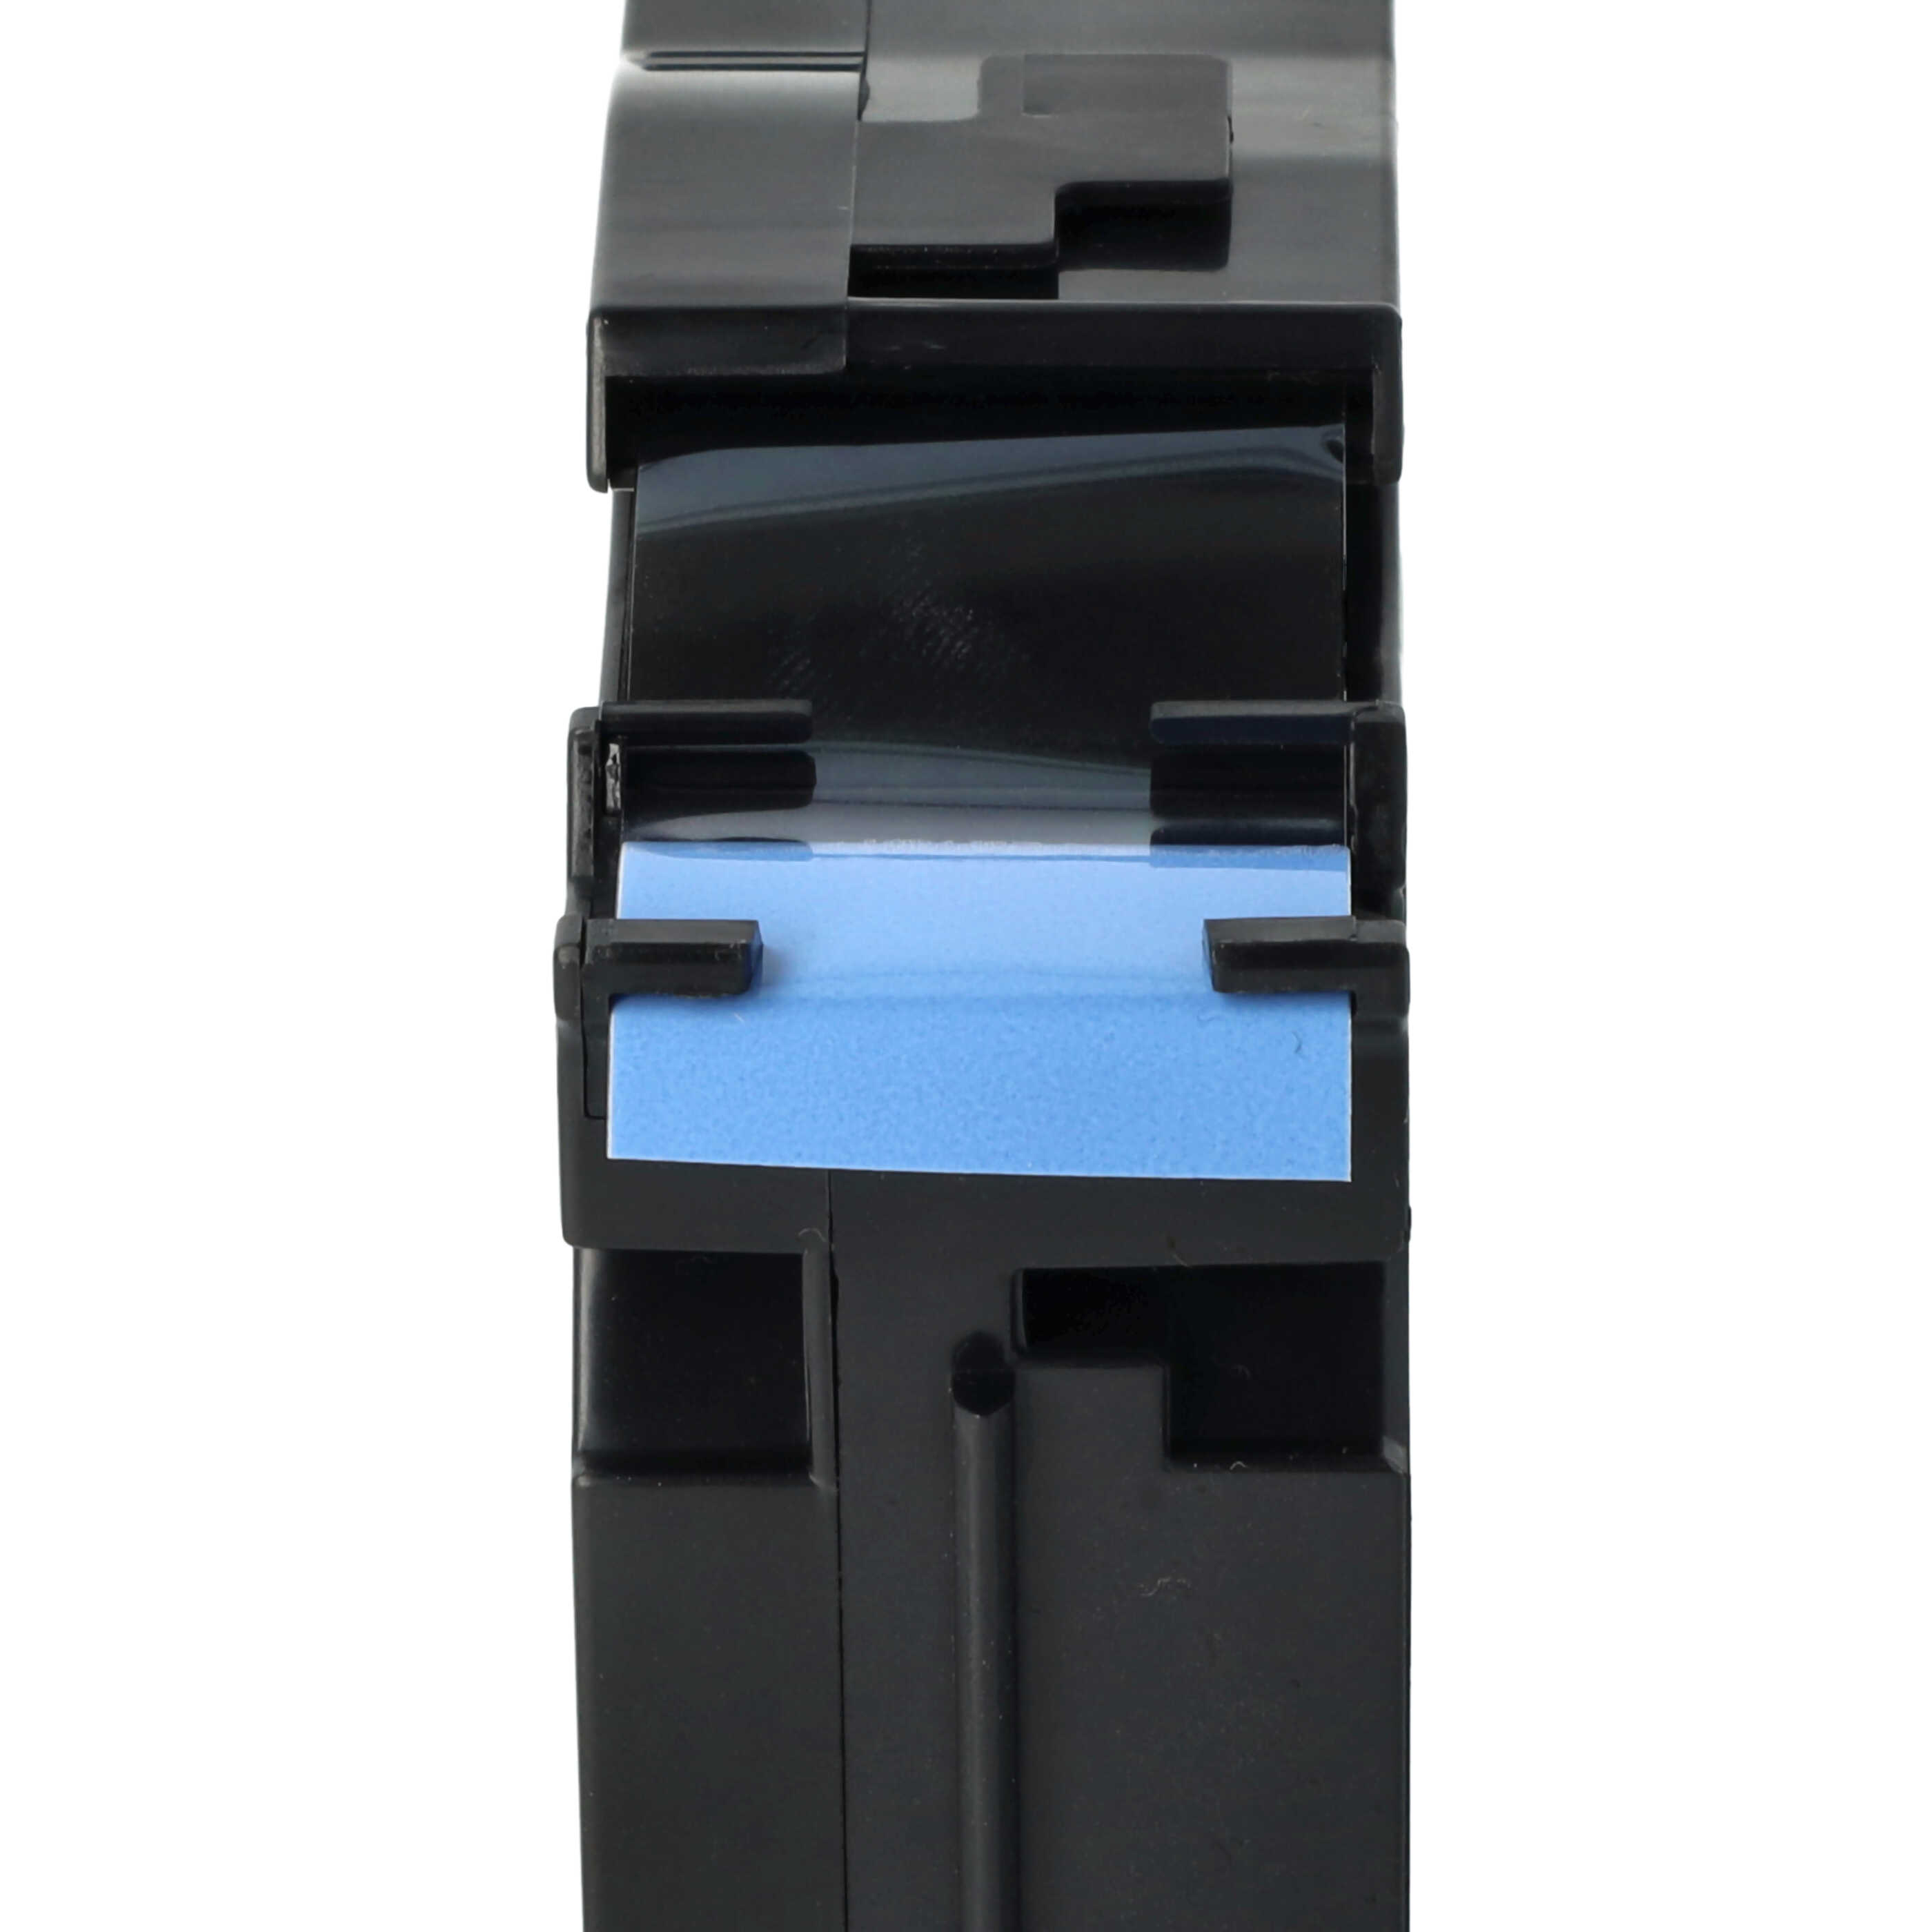 Casete cinta escritura reemplaza Brother TZE-551, TZ-551 Negro su Azul